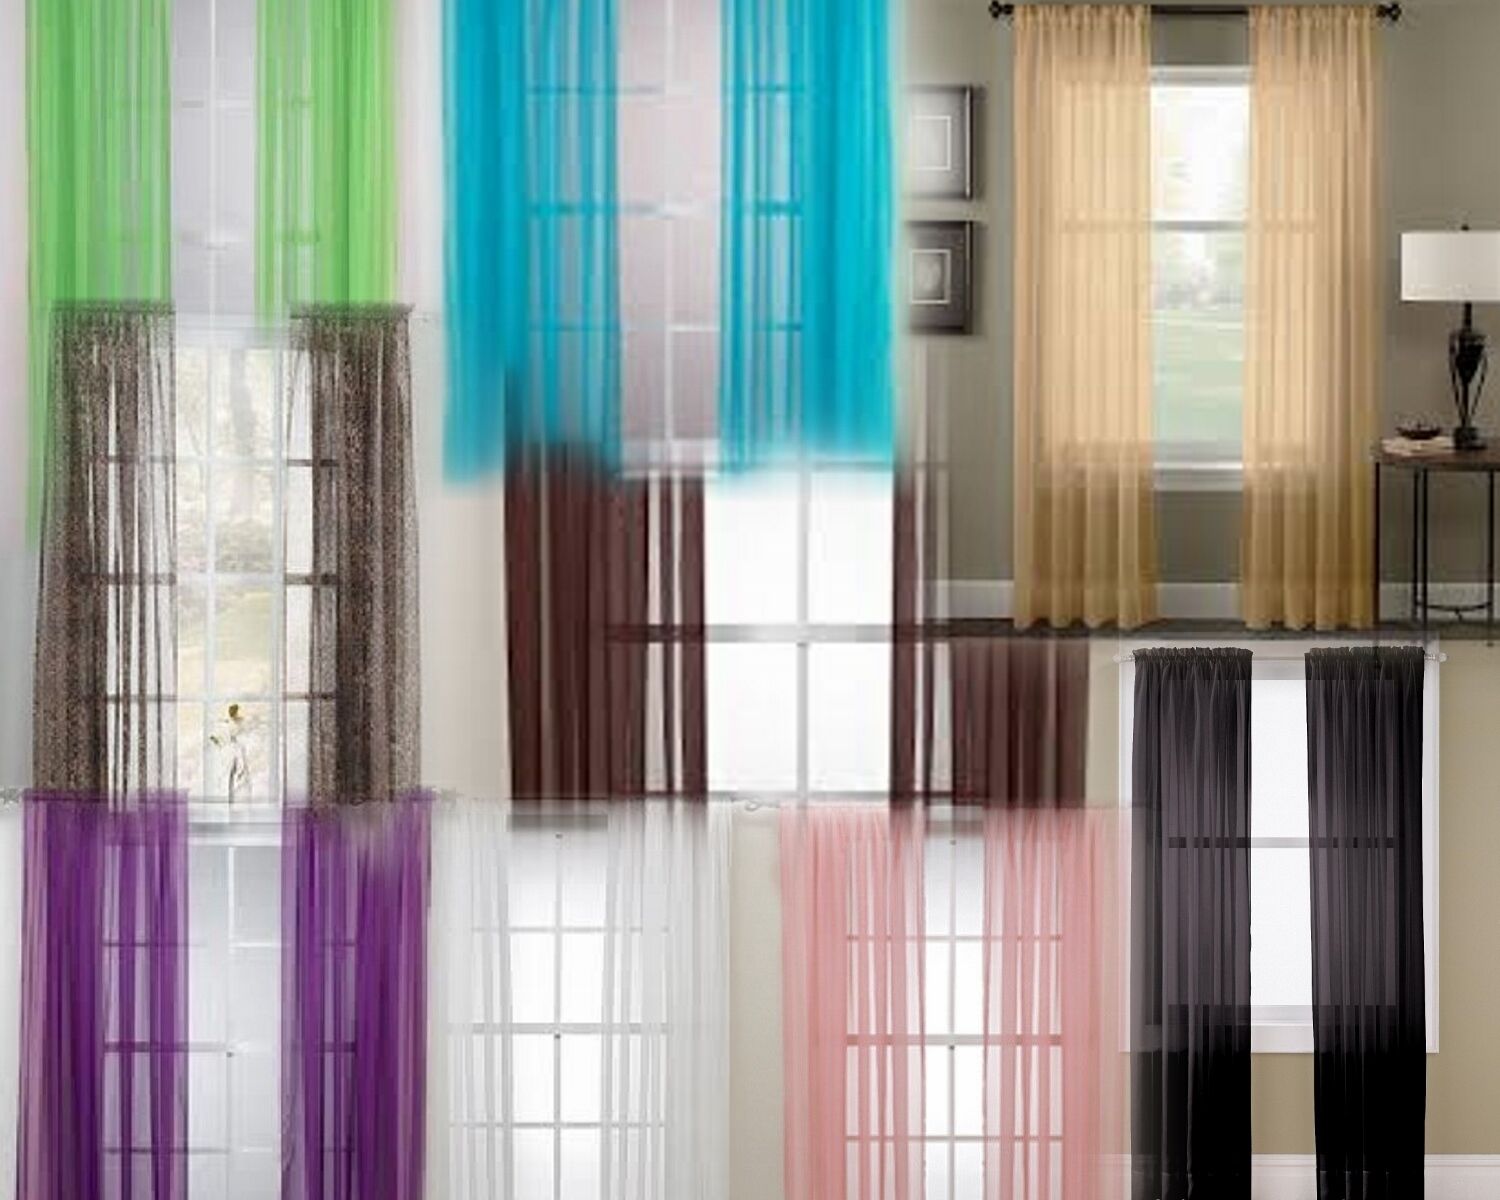 2 Panels Voile Sheer Fabric Elegant Window Curtain Drape Use Many Styles 52"x84"